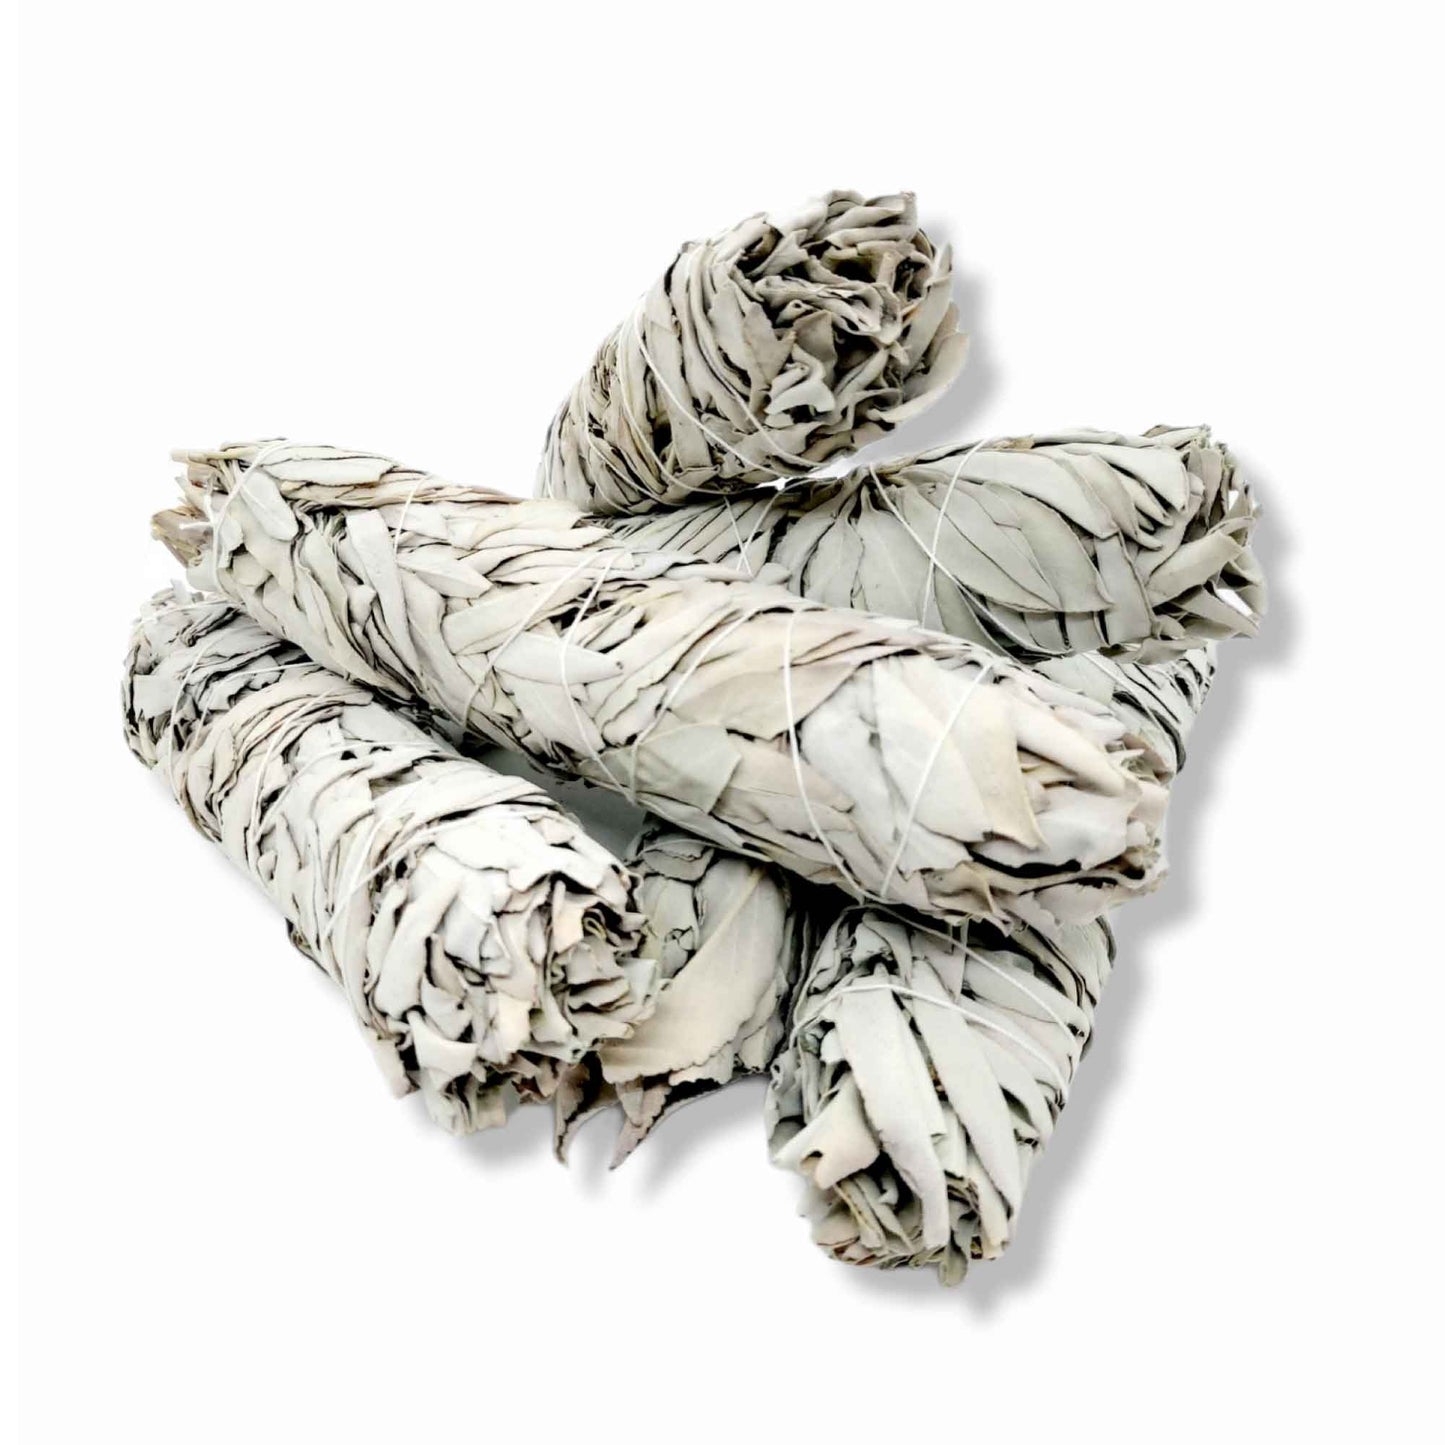 4x Californian White Sage Smudge Sticks - Jumbo 20-22cm Incense Cleansing Bundle